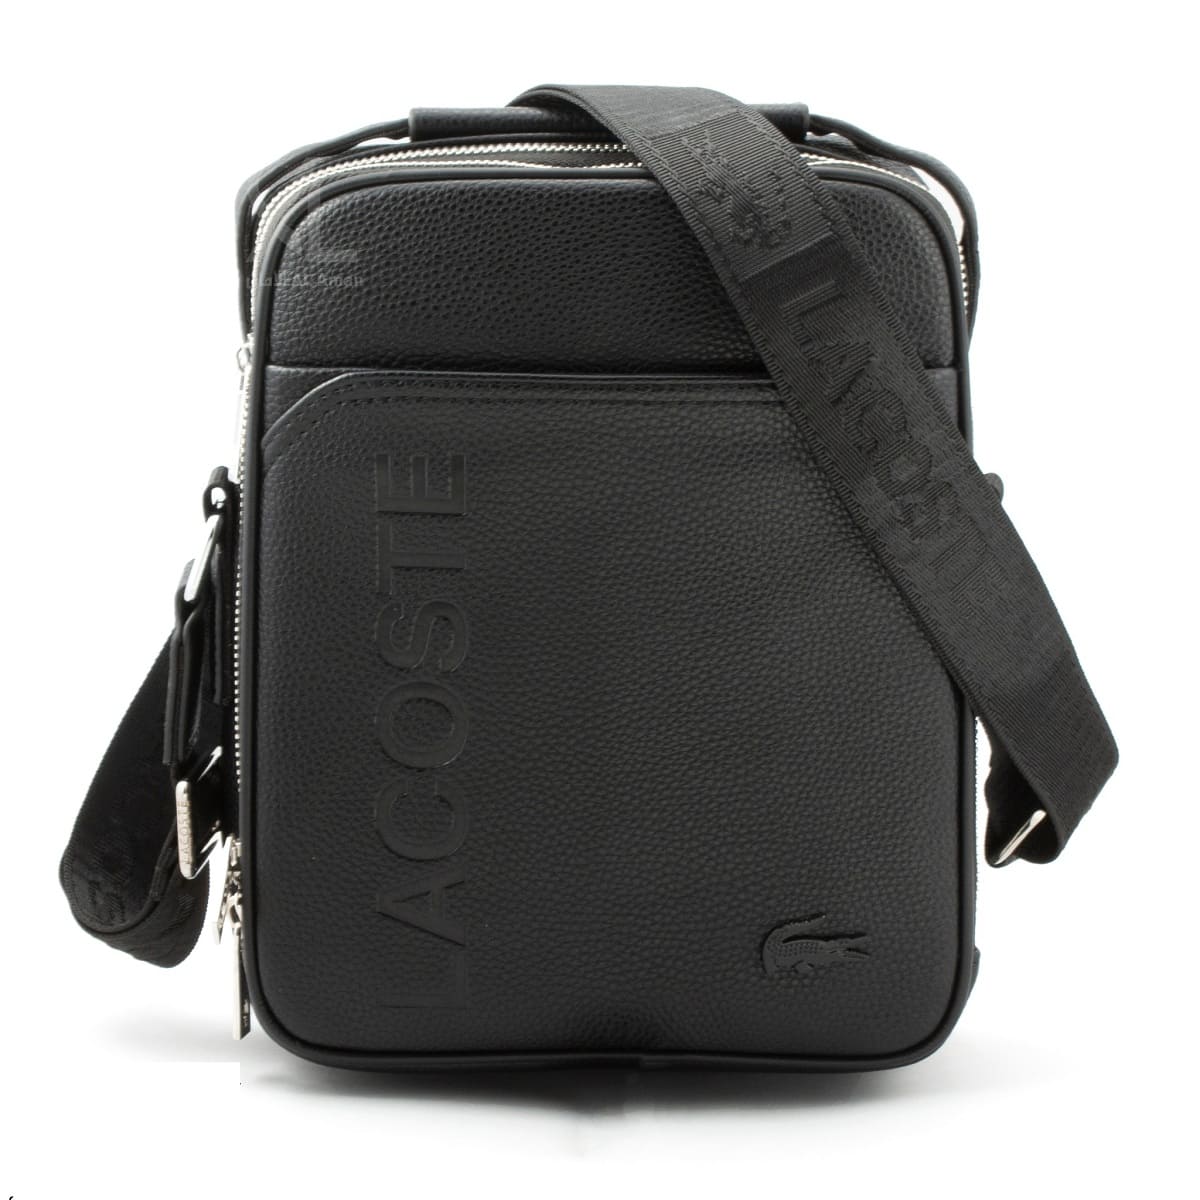 Lacoste-crossbag-with-hand-black-color-leather-men's-bag-messenger